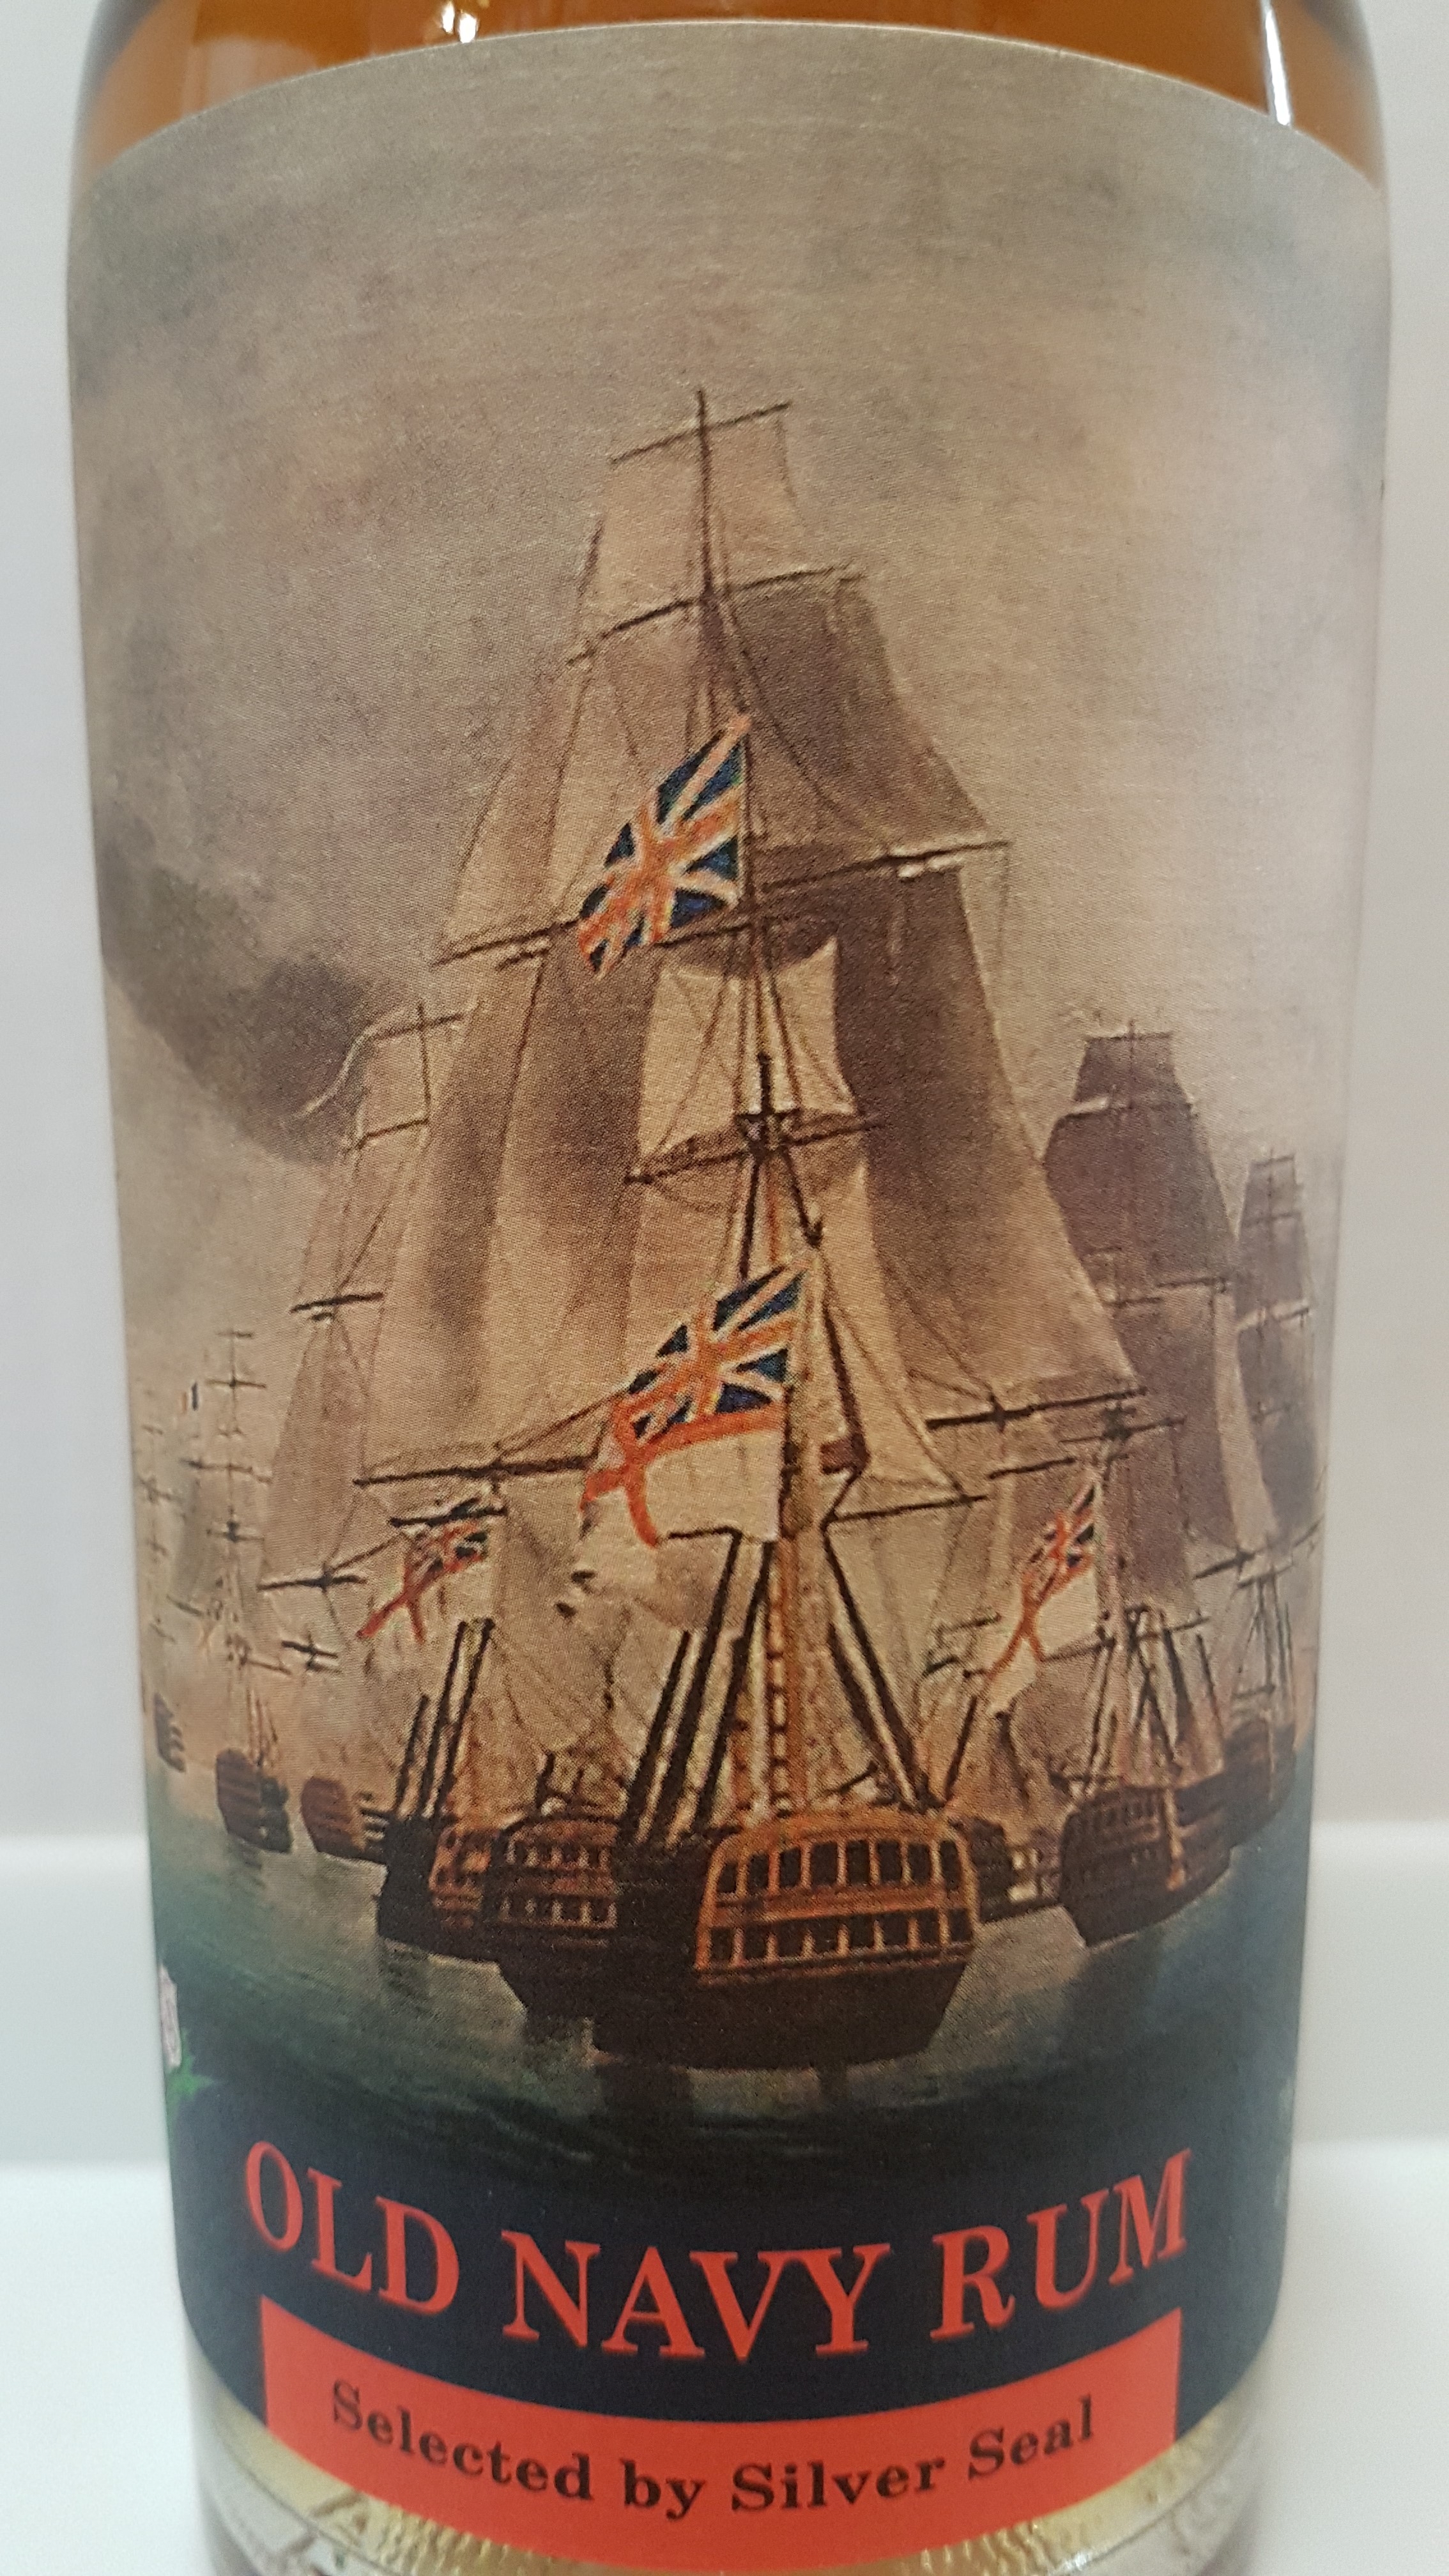 Old Navy Rum NAS - Silver Seal